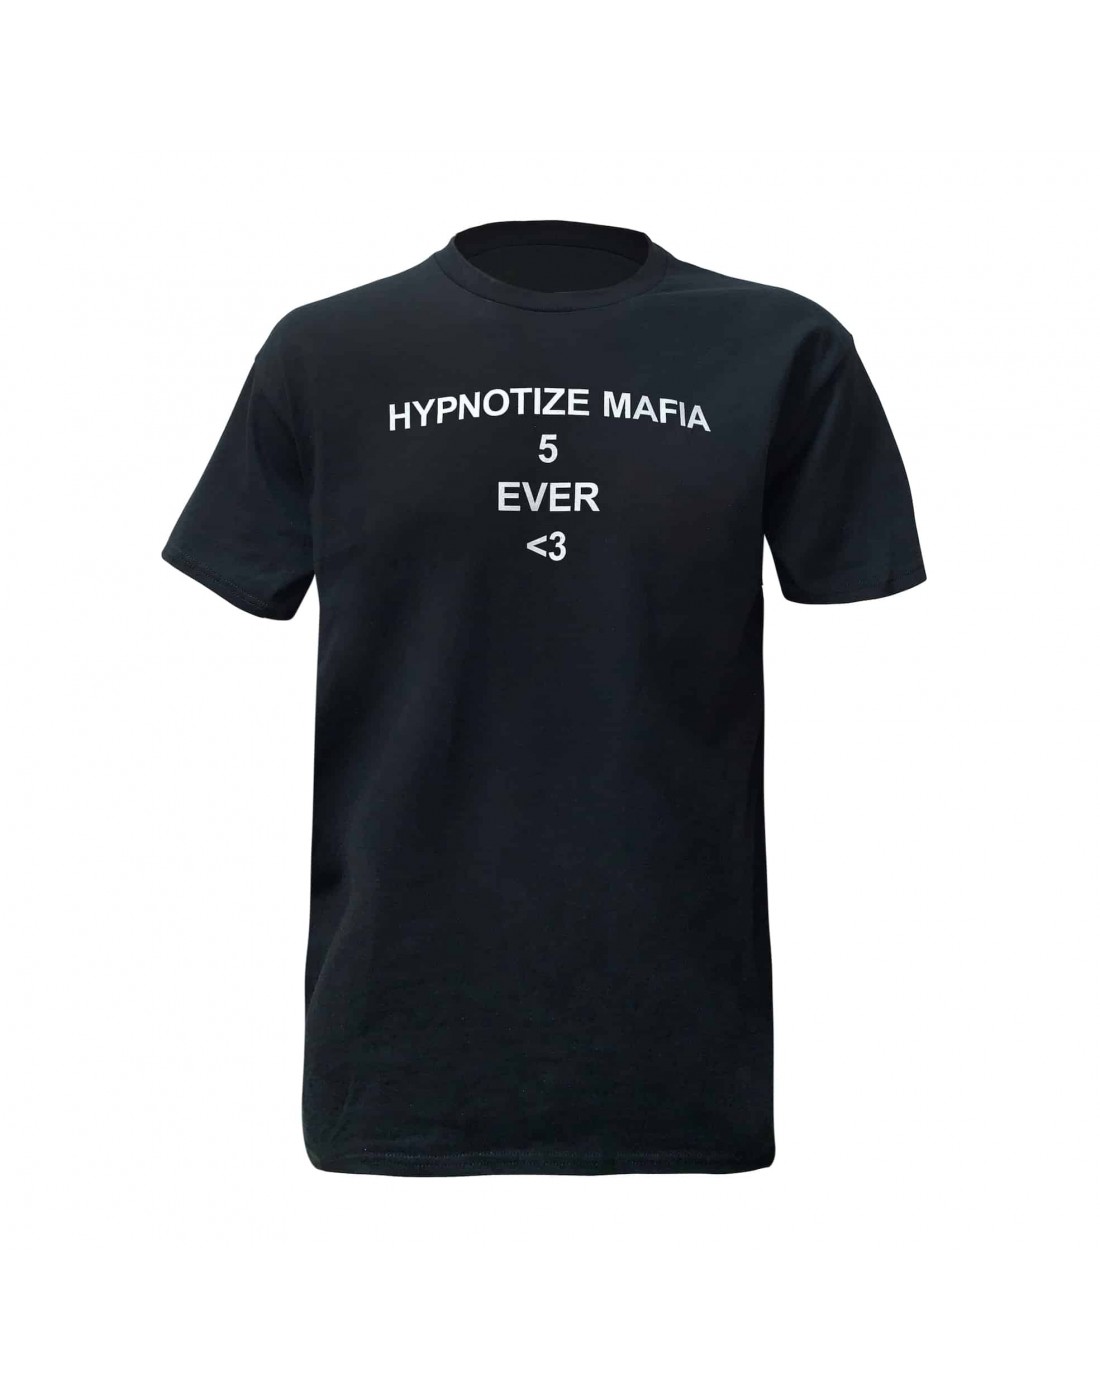 Hypnotize Mafia 5 Ever T-Shirt